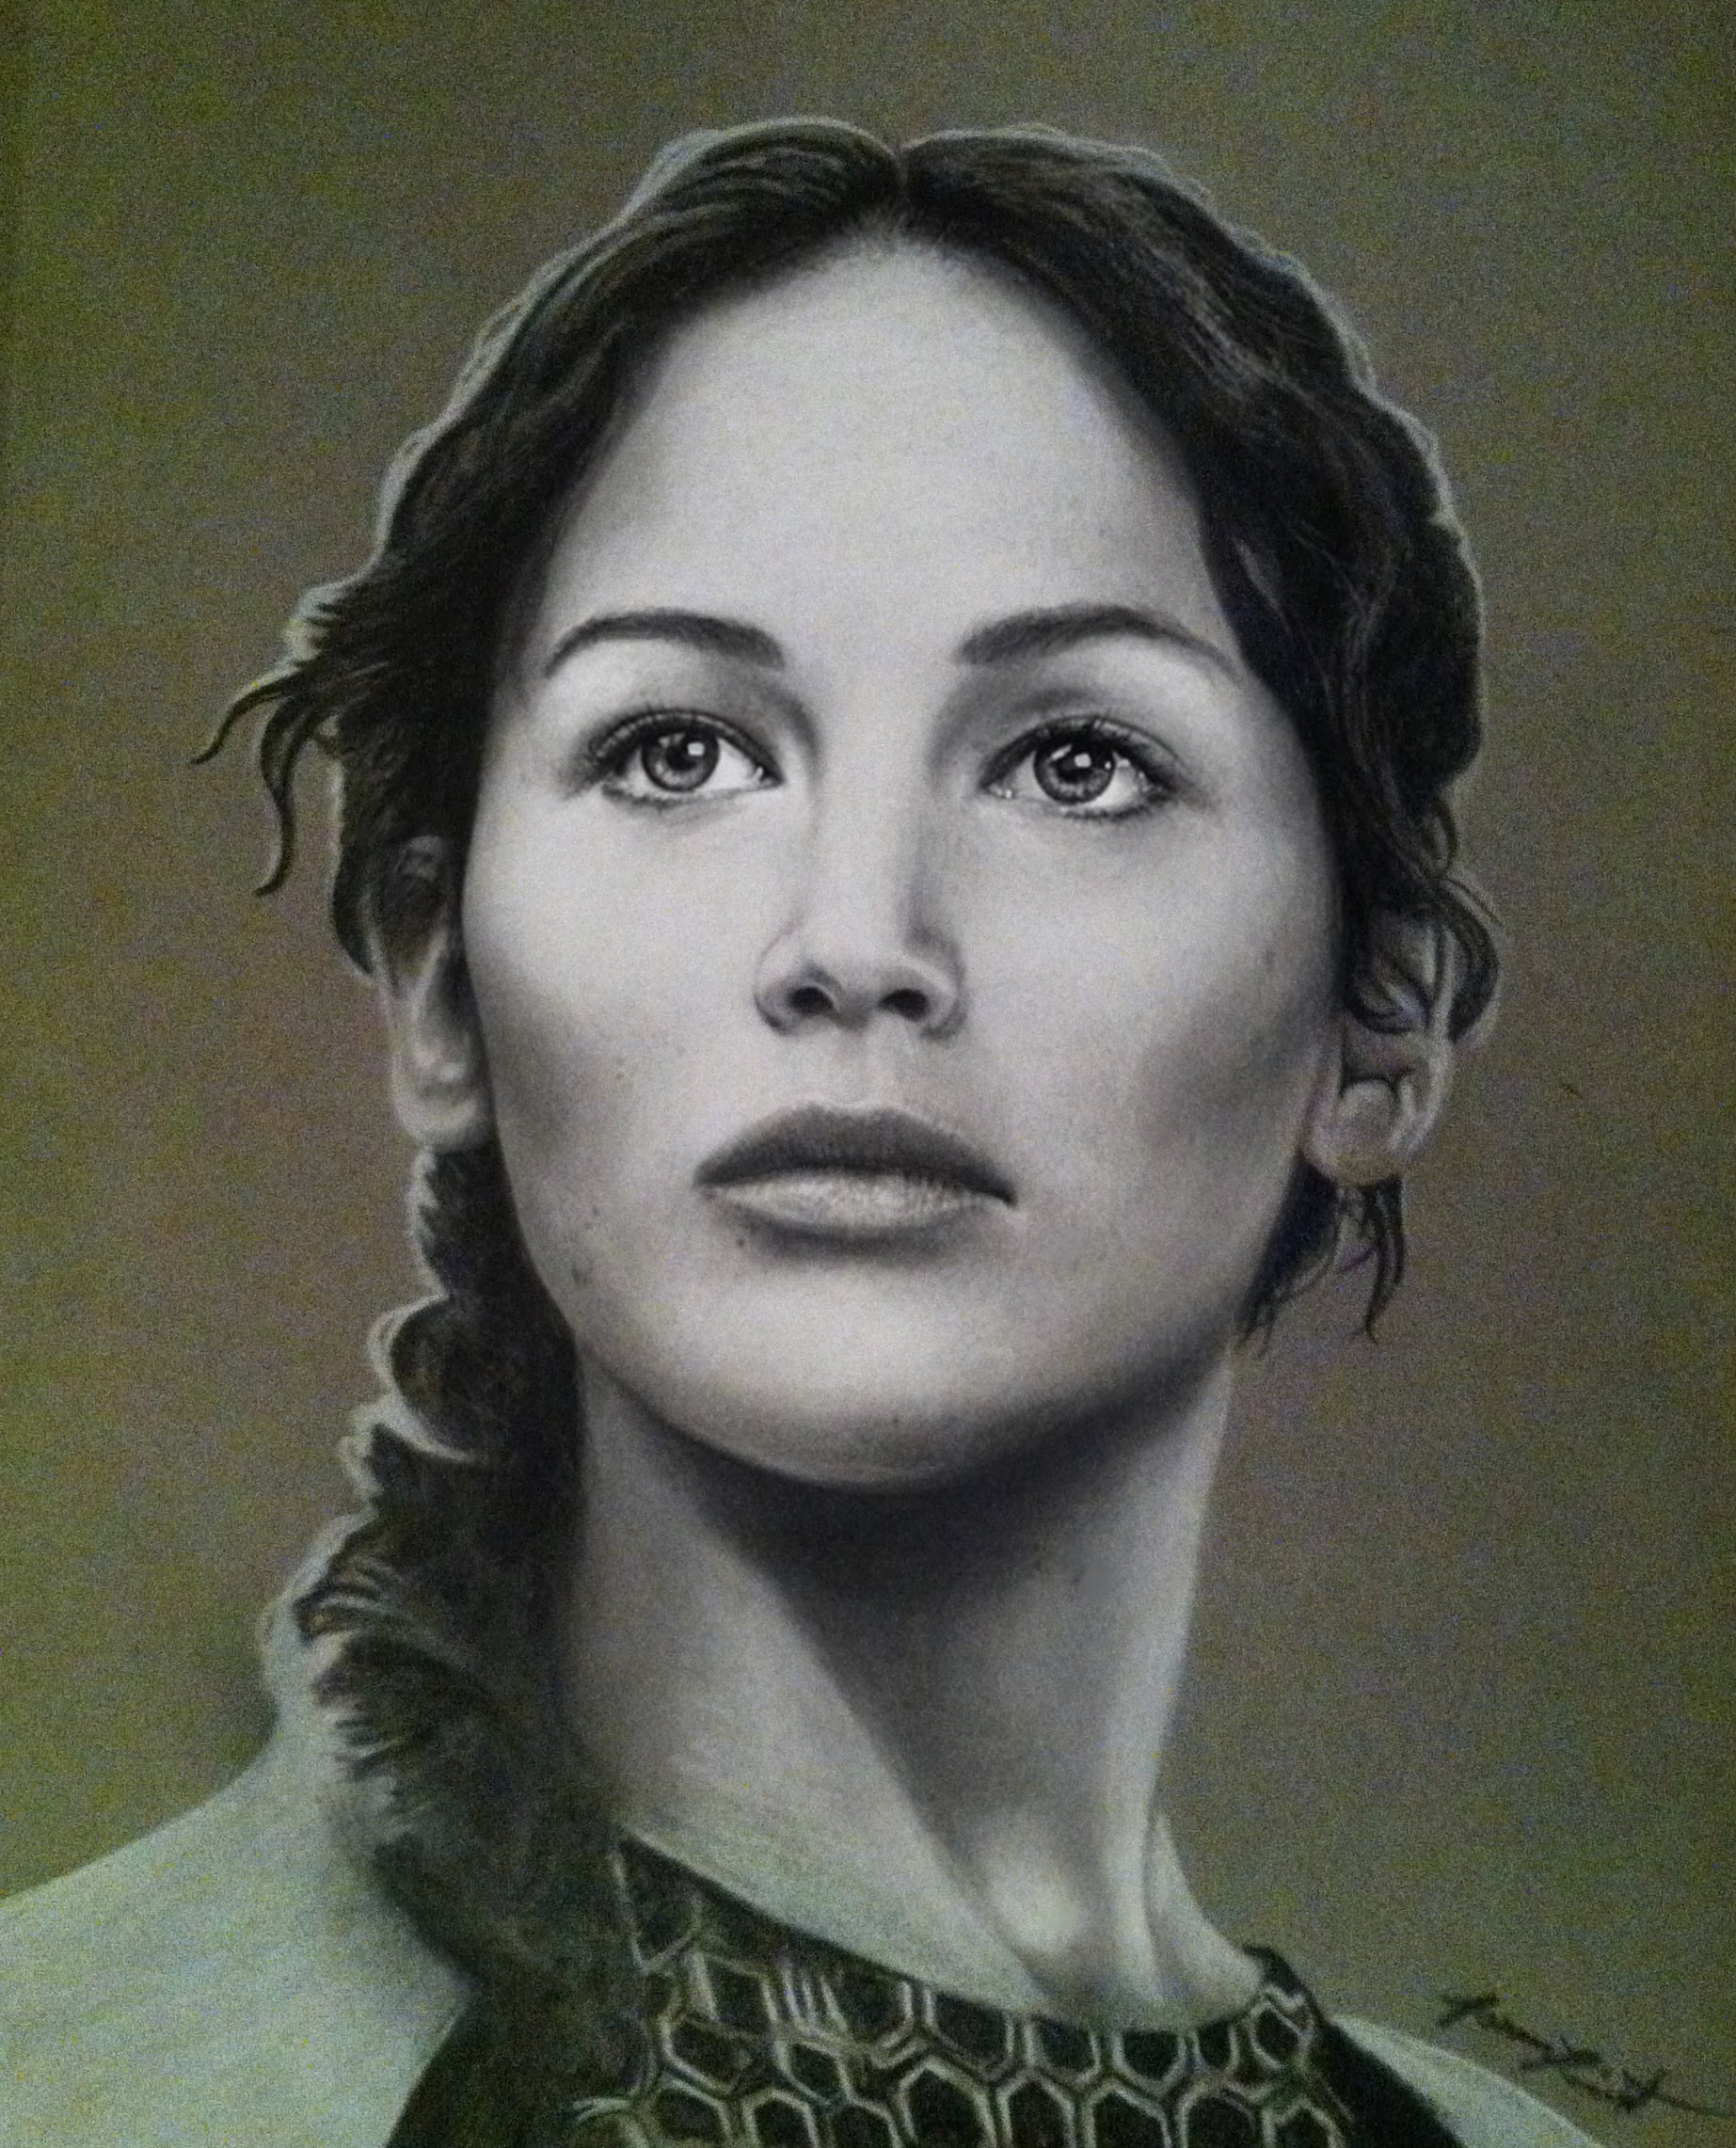 Jennifer Lawrence as Katniss Everdeen Artist: Jaron Priest